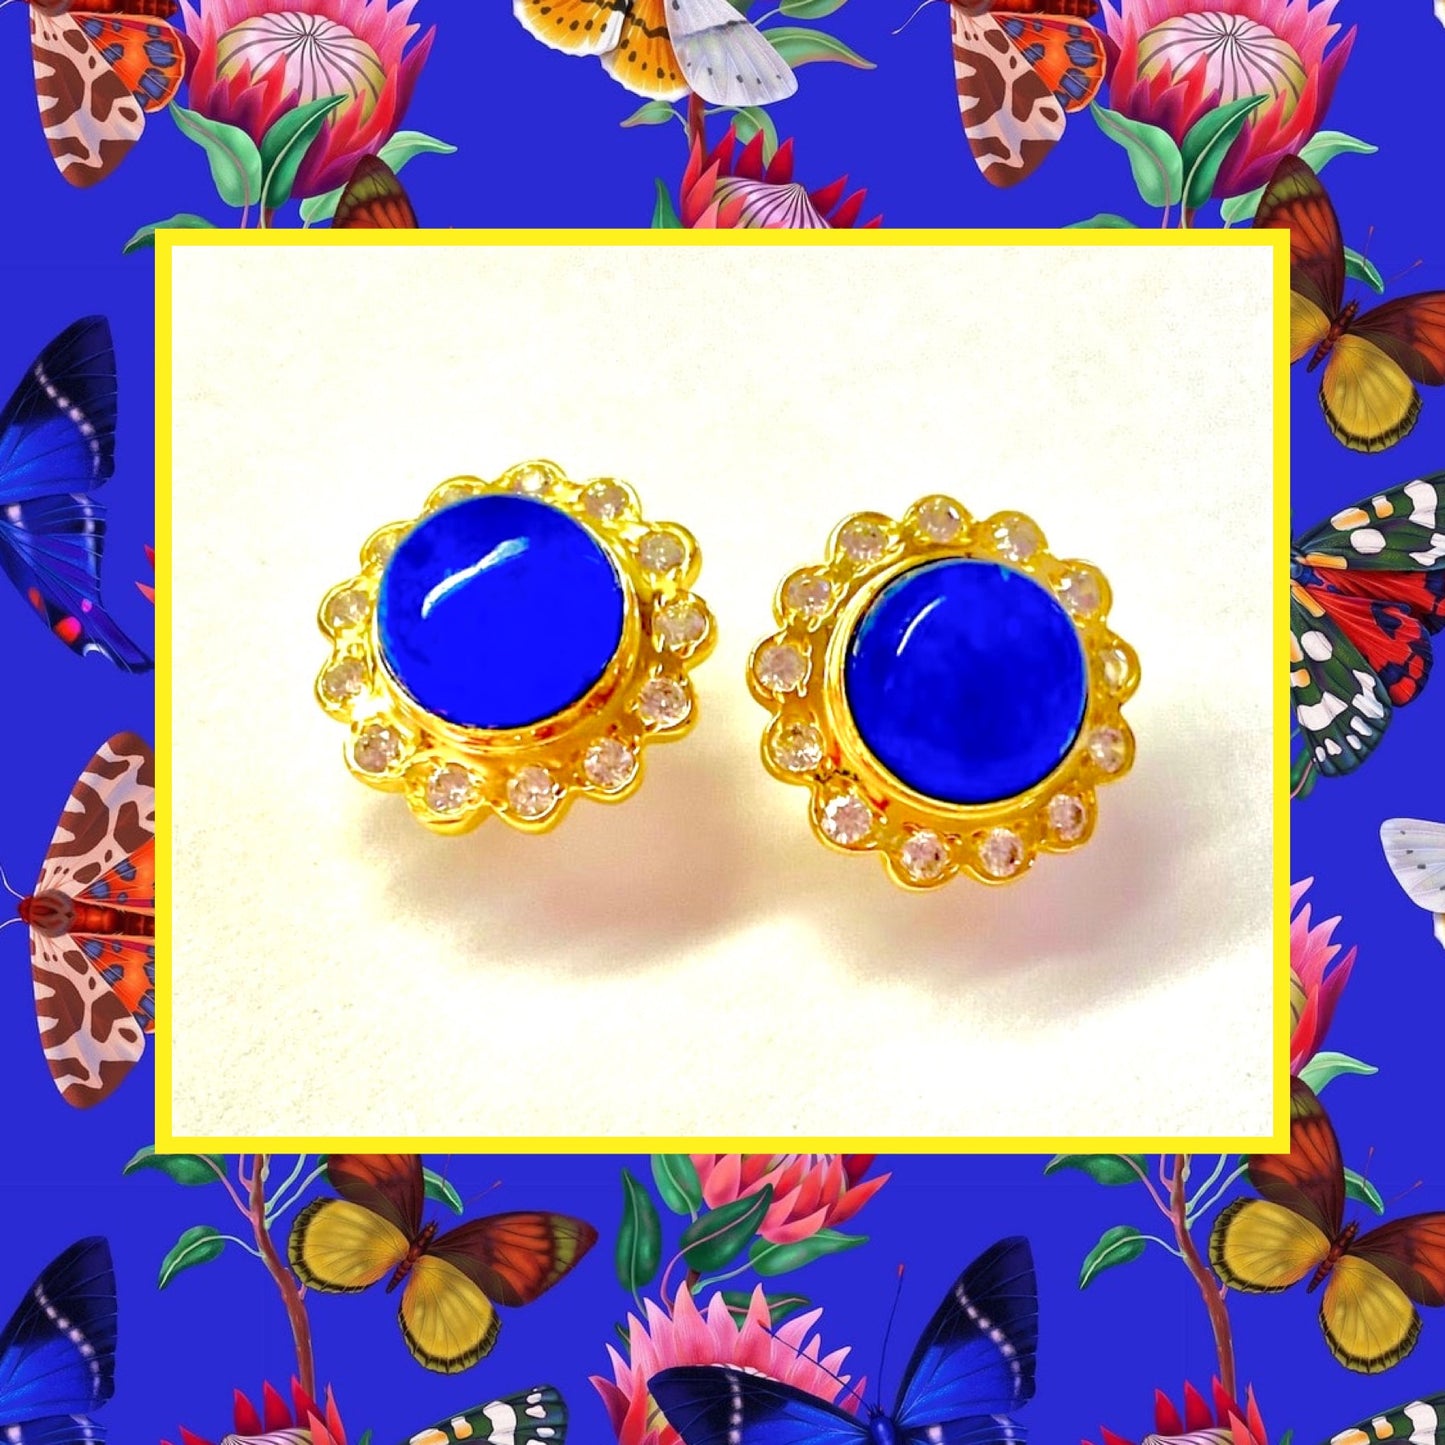 French Blue Chalcedony Gemstone Gold Stud Earrings